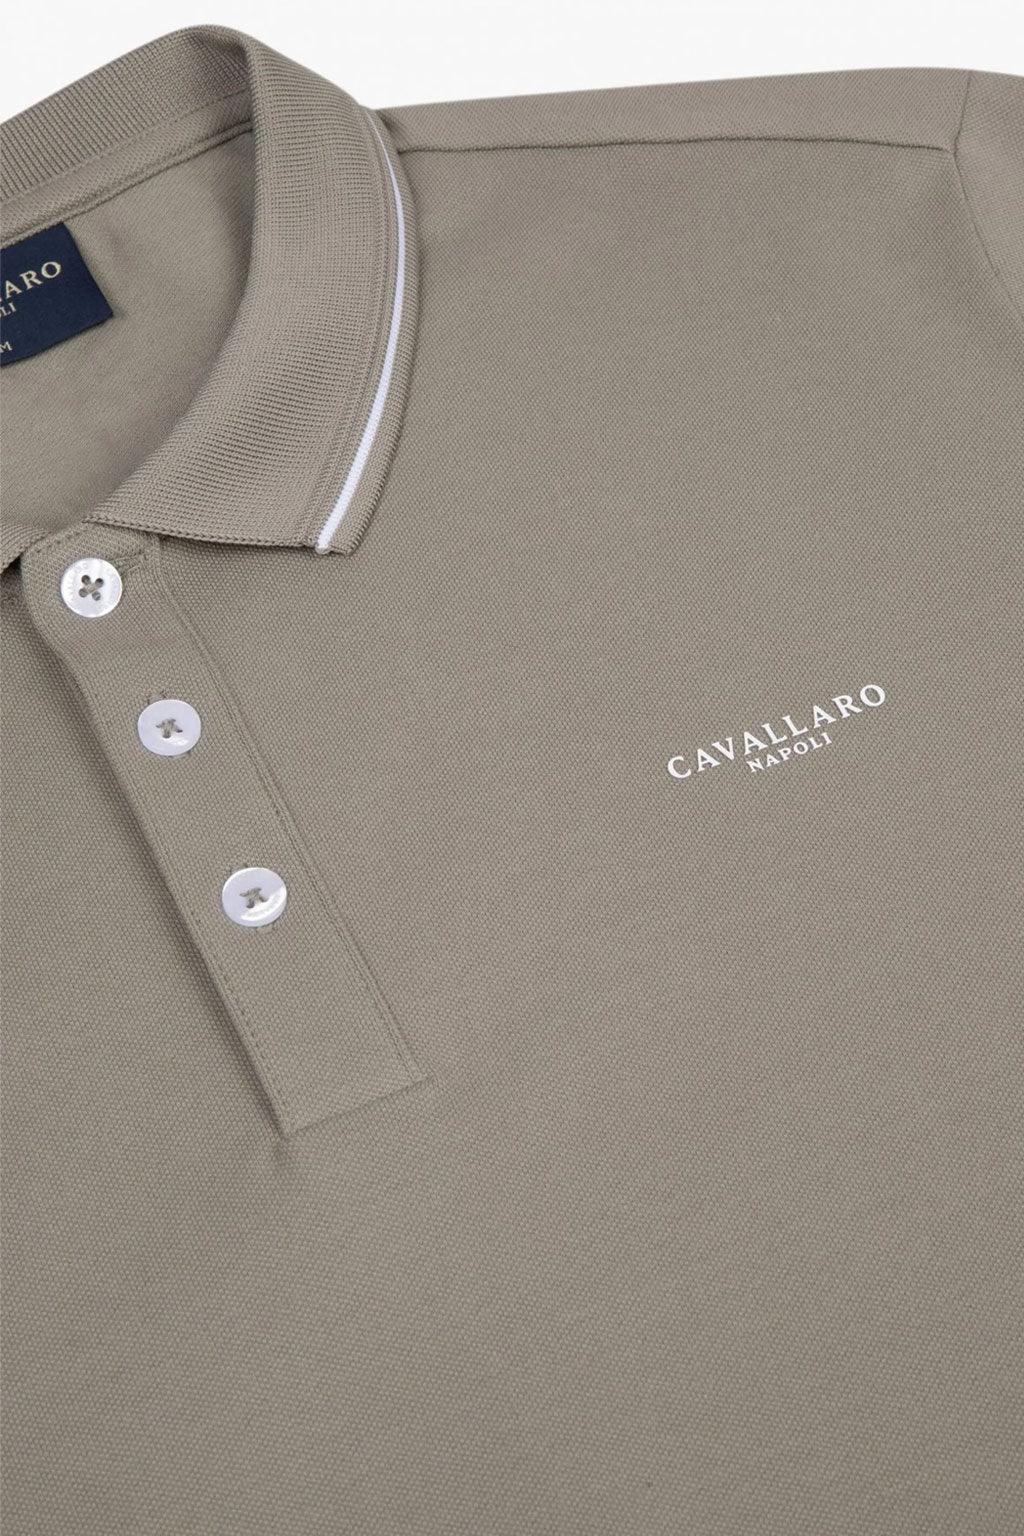 Cavallaro polo - Big Boss | the menswear concept